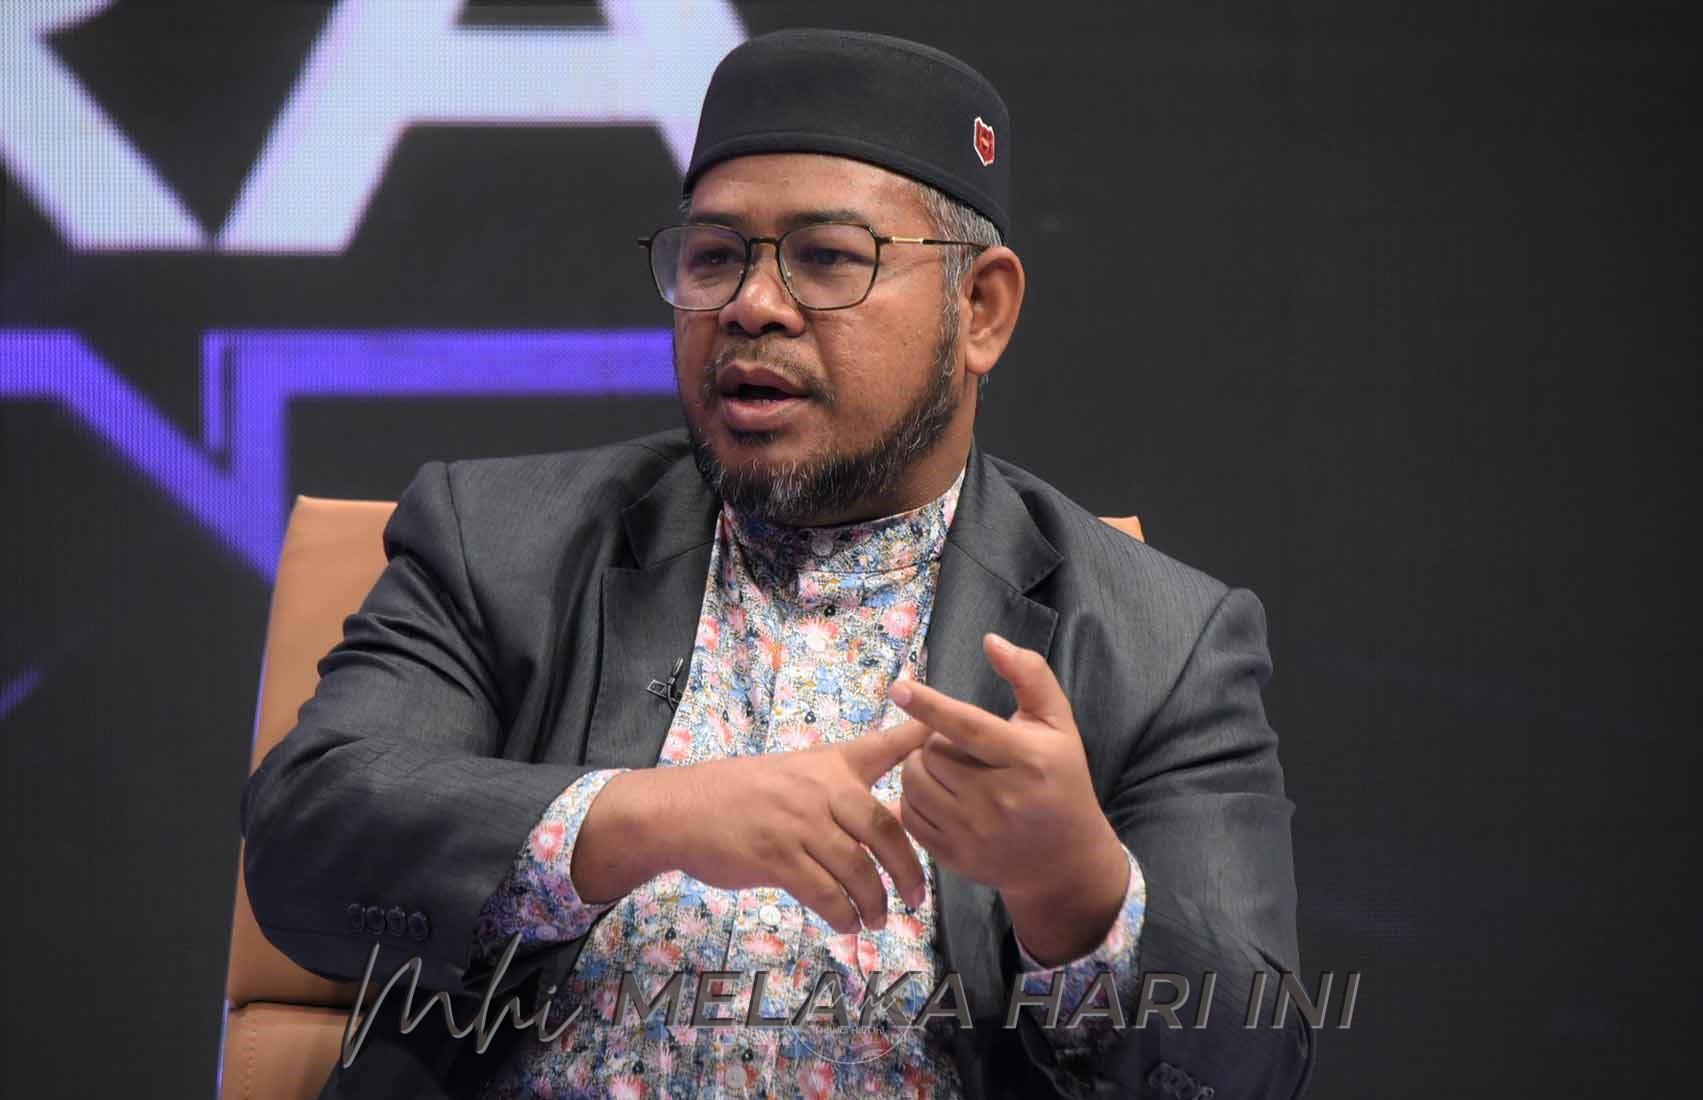 Bicara Naratif Bersama Yb Dato Dr Mohd Khairuddin Bin Aman Razali Di Wisma Berita Angksapuri Rtm 2 20210324 1486577417